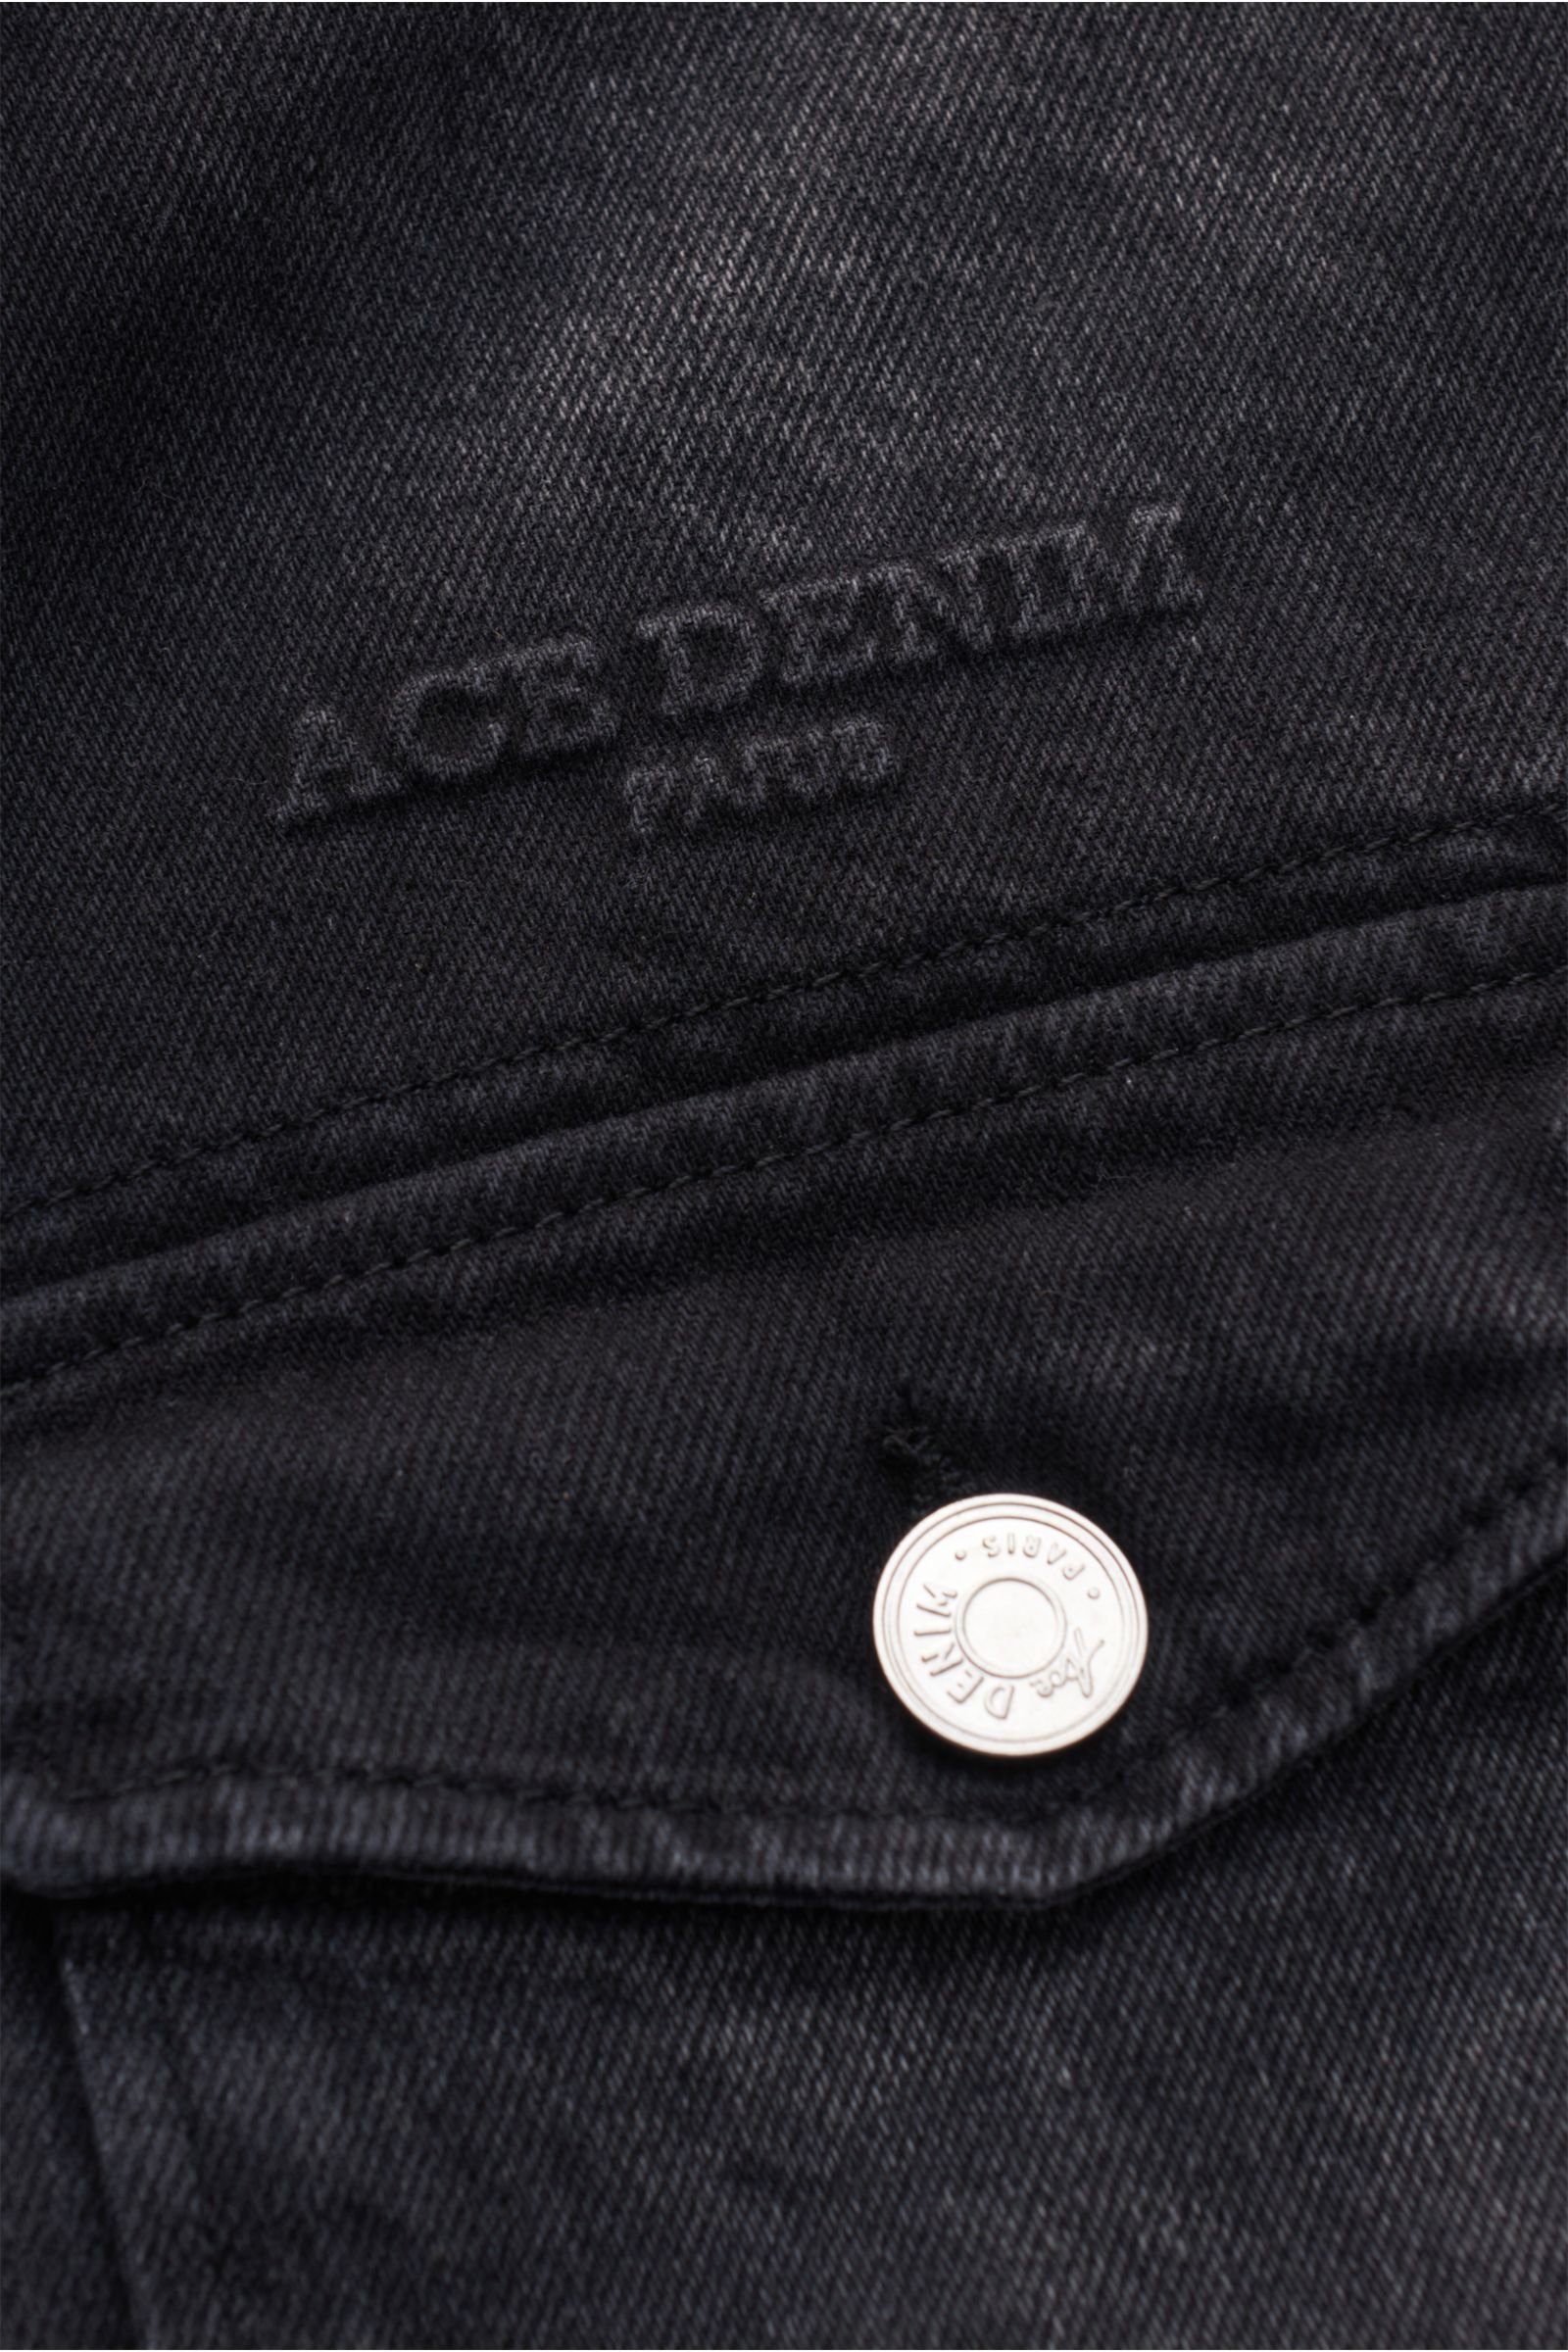 ACE DENIM denim jacket dark grey | BRAUN Hamburg